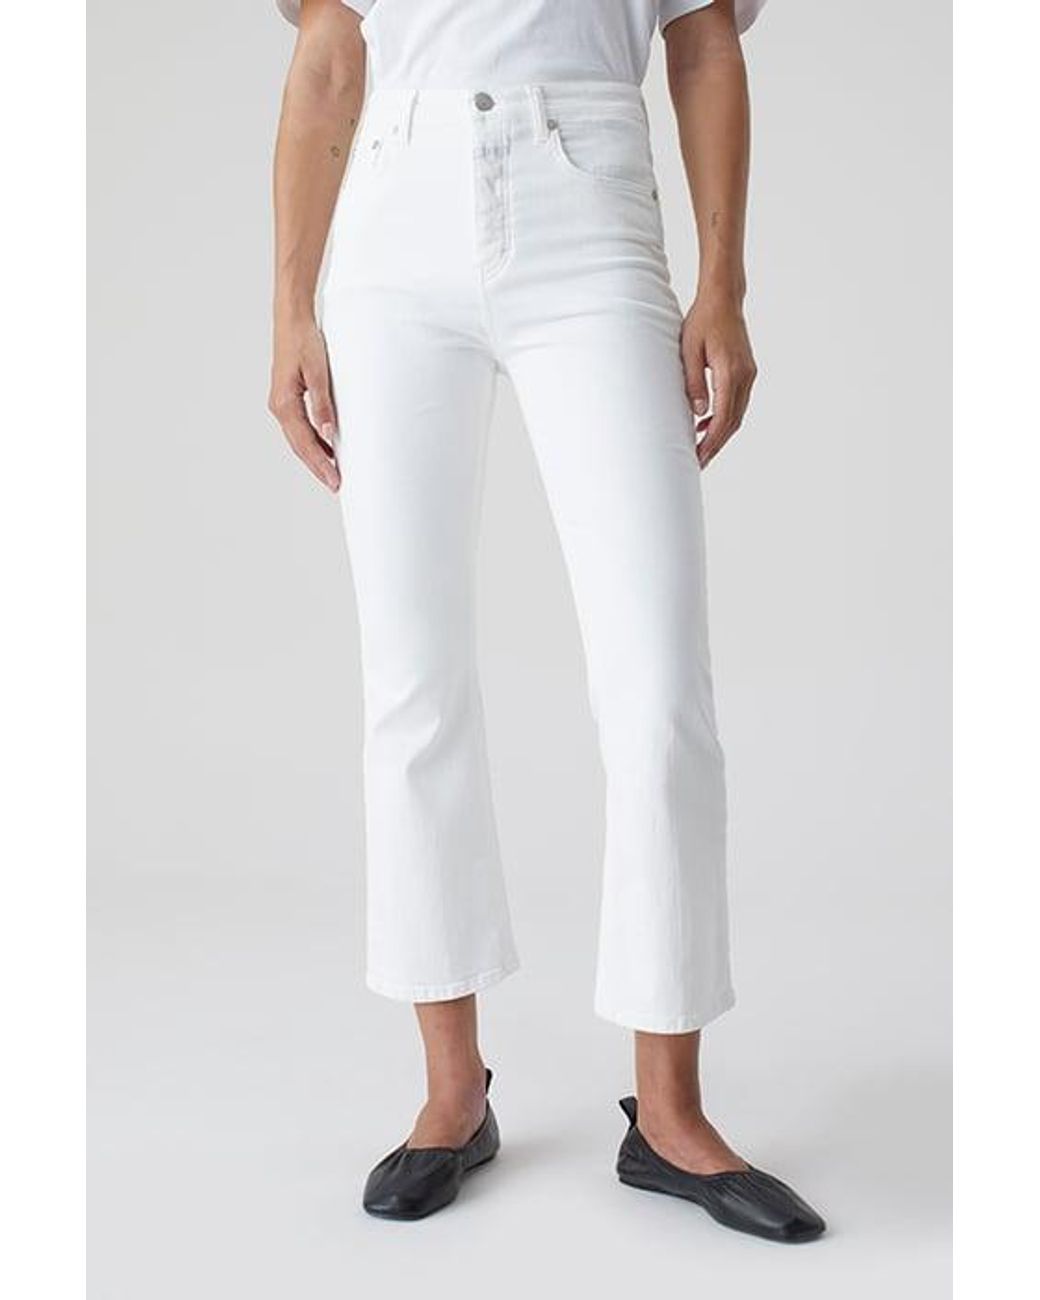 Closed Hi-sun Jeans White Size 26 | Lyst